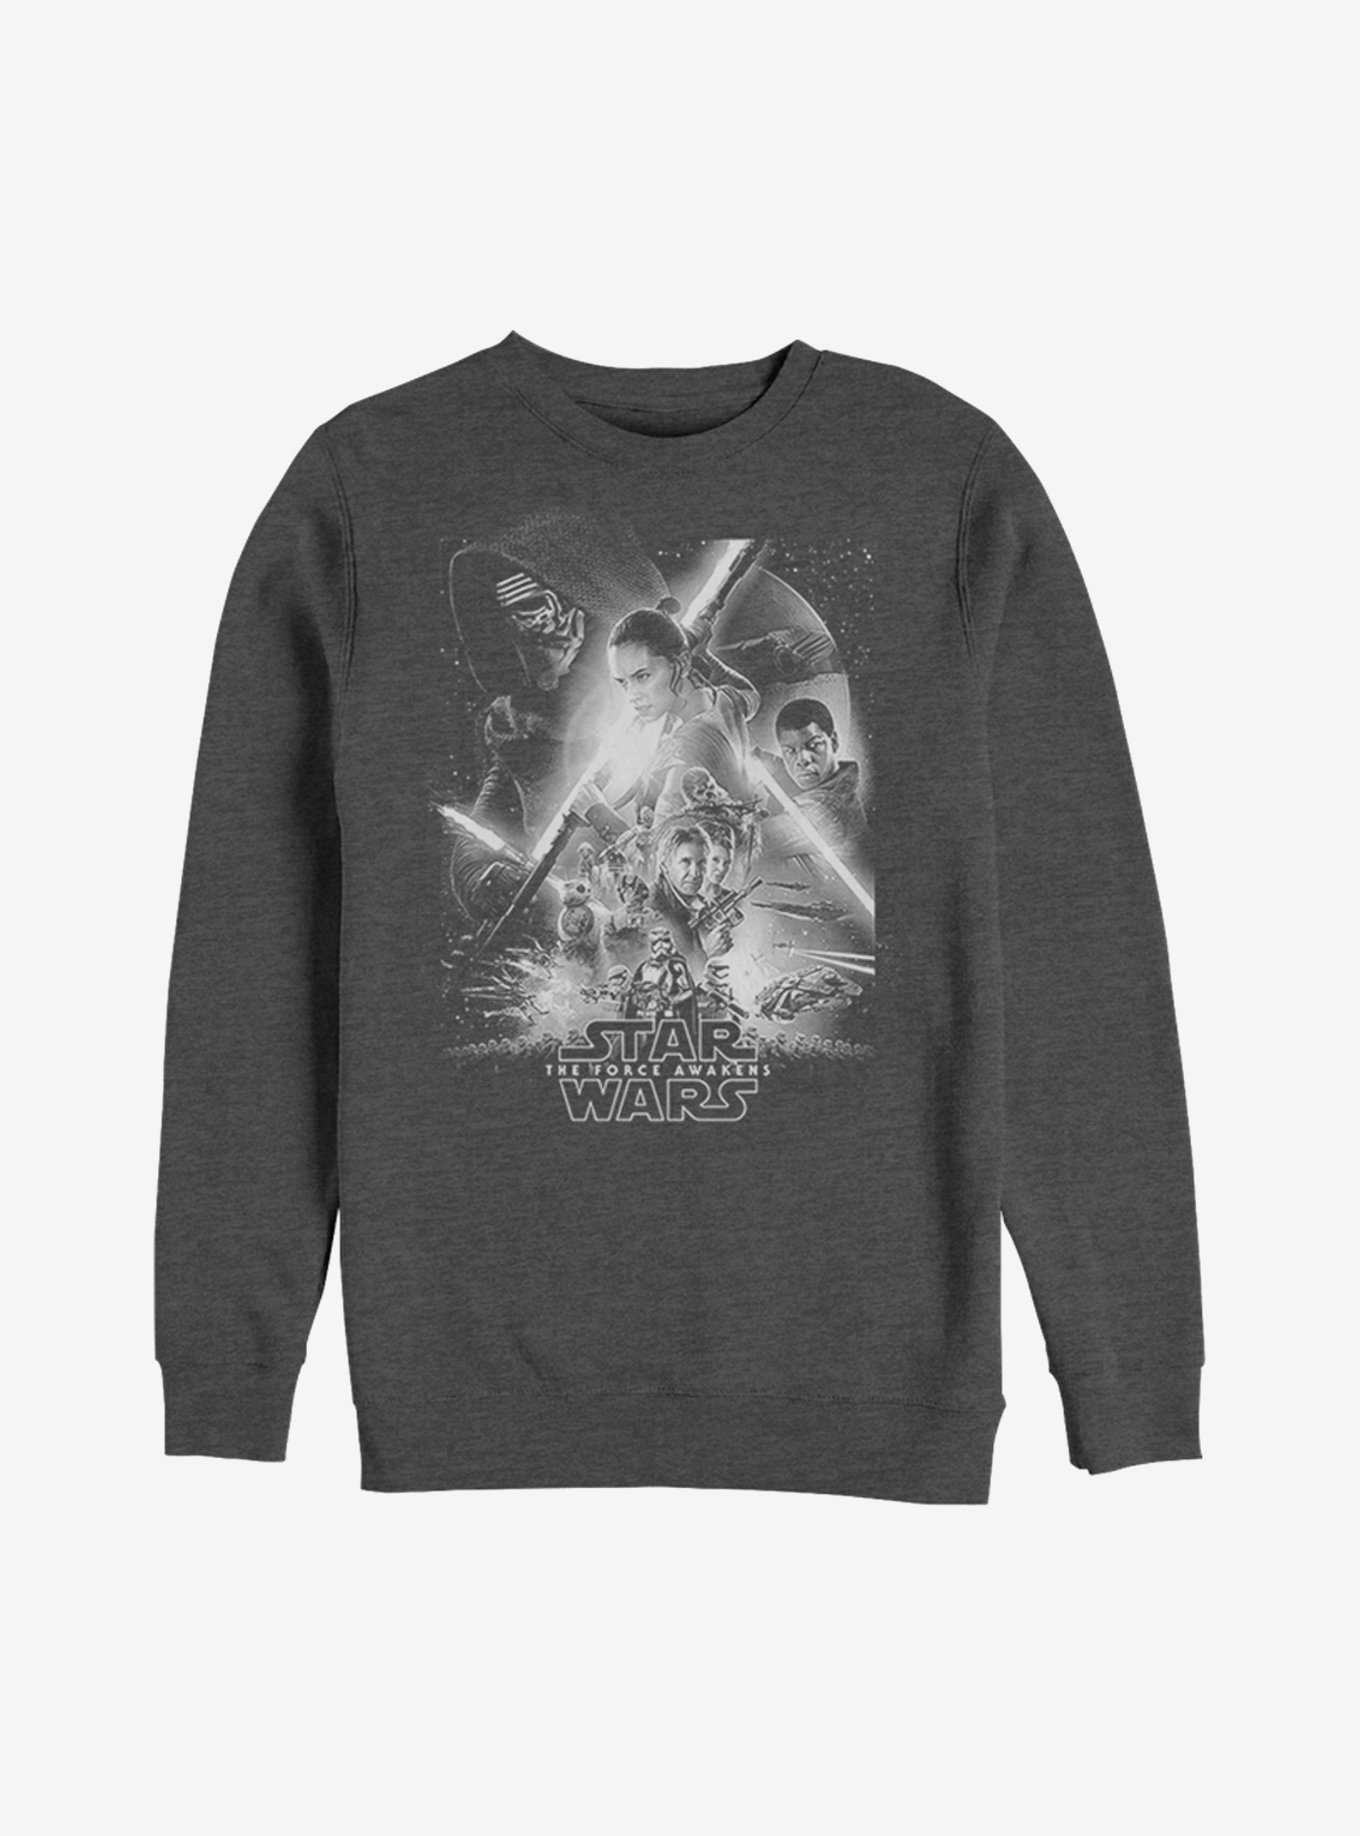 Star Wars Episode VII The Force Awakens Grey-Scale Poster Sweatshirt, , hi-res